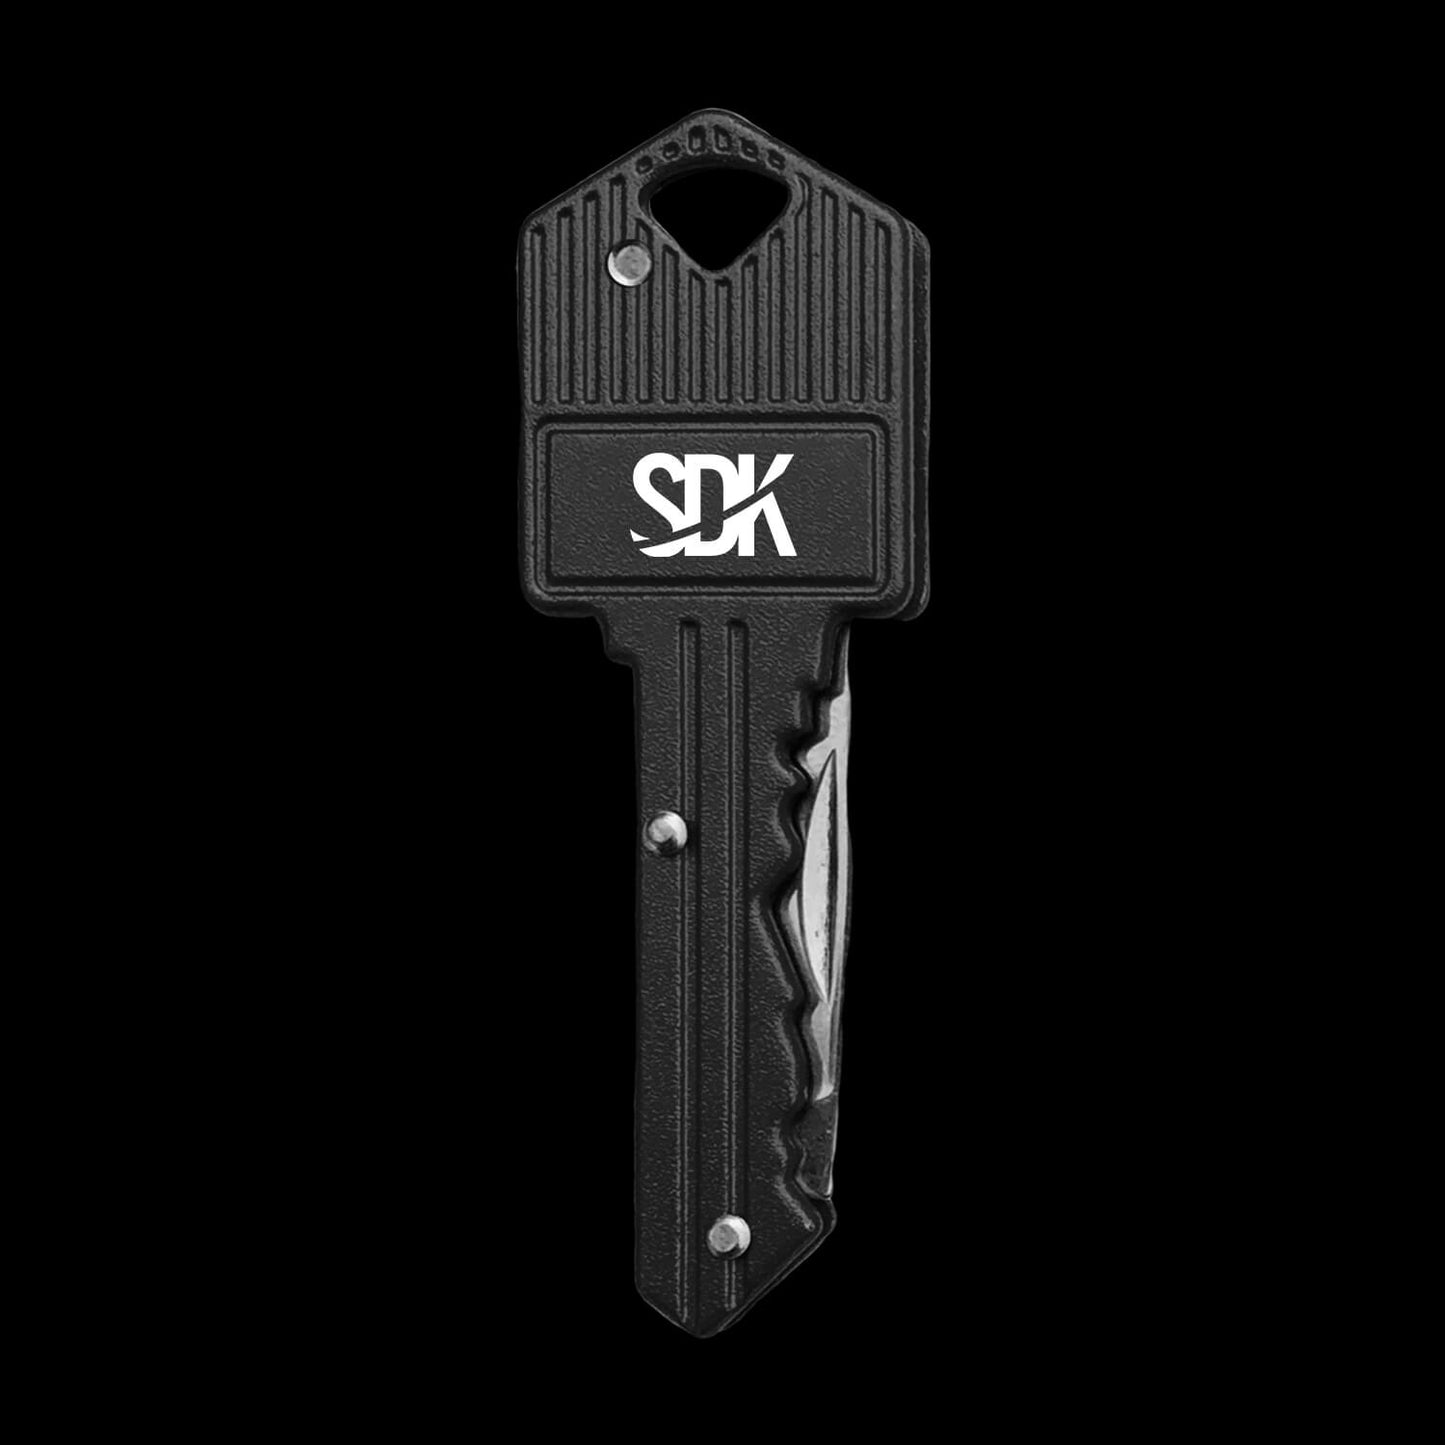 SDK Key Knife Black (stainless steel key-shaped flip knife)